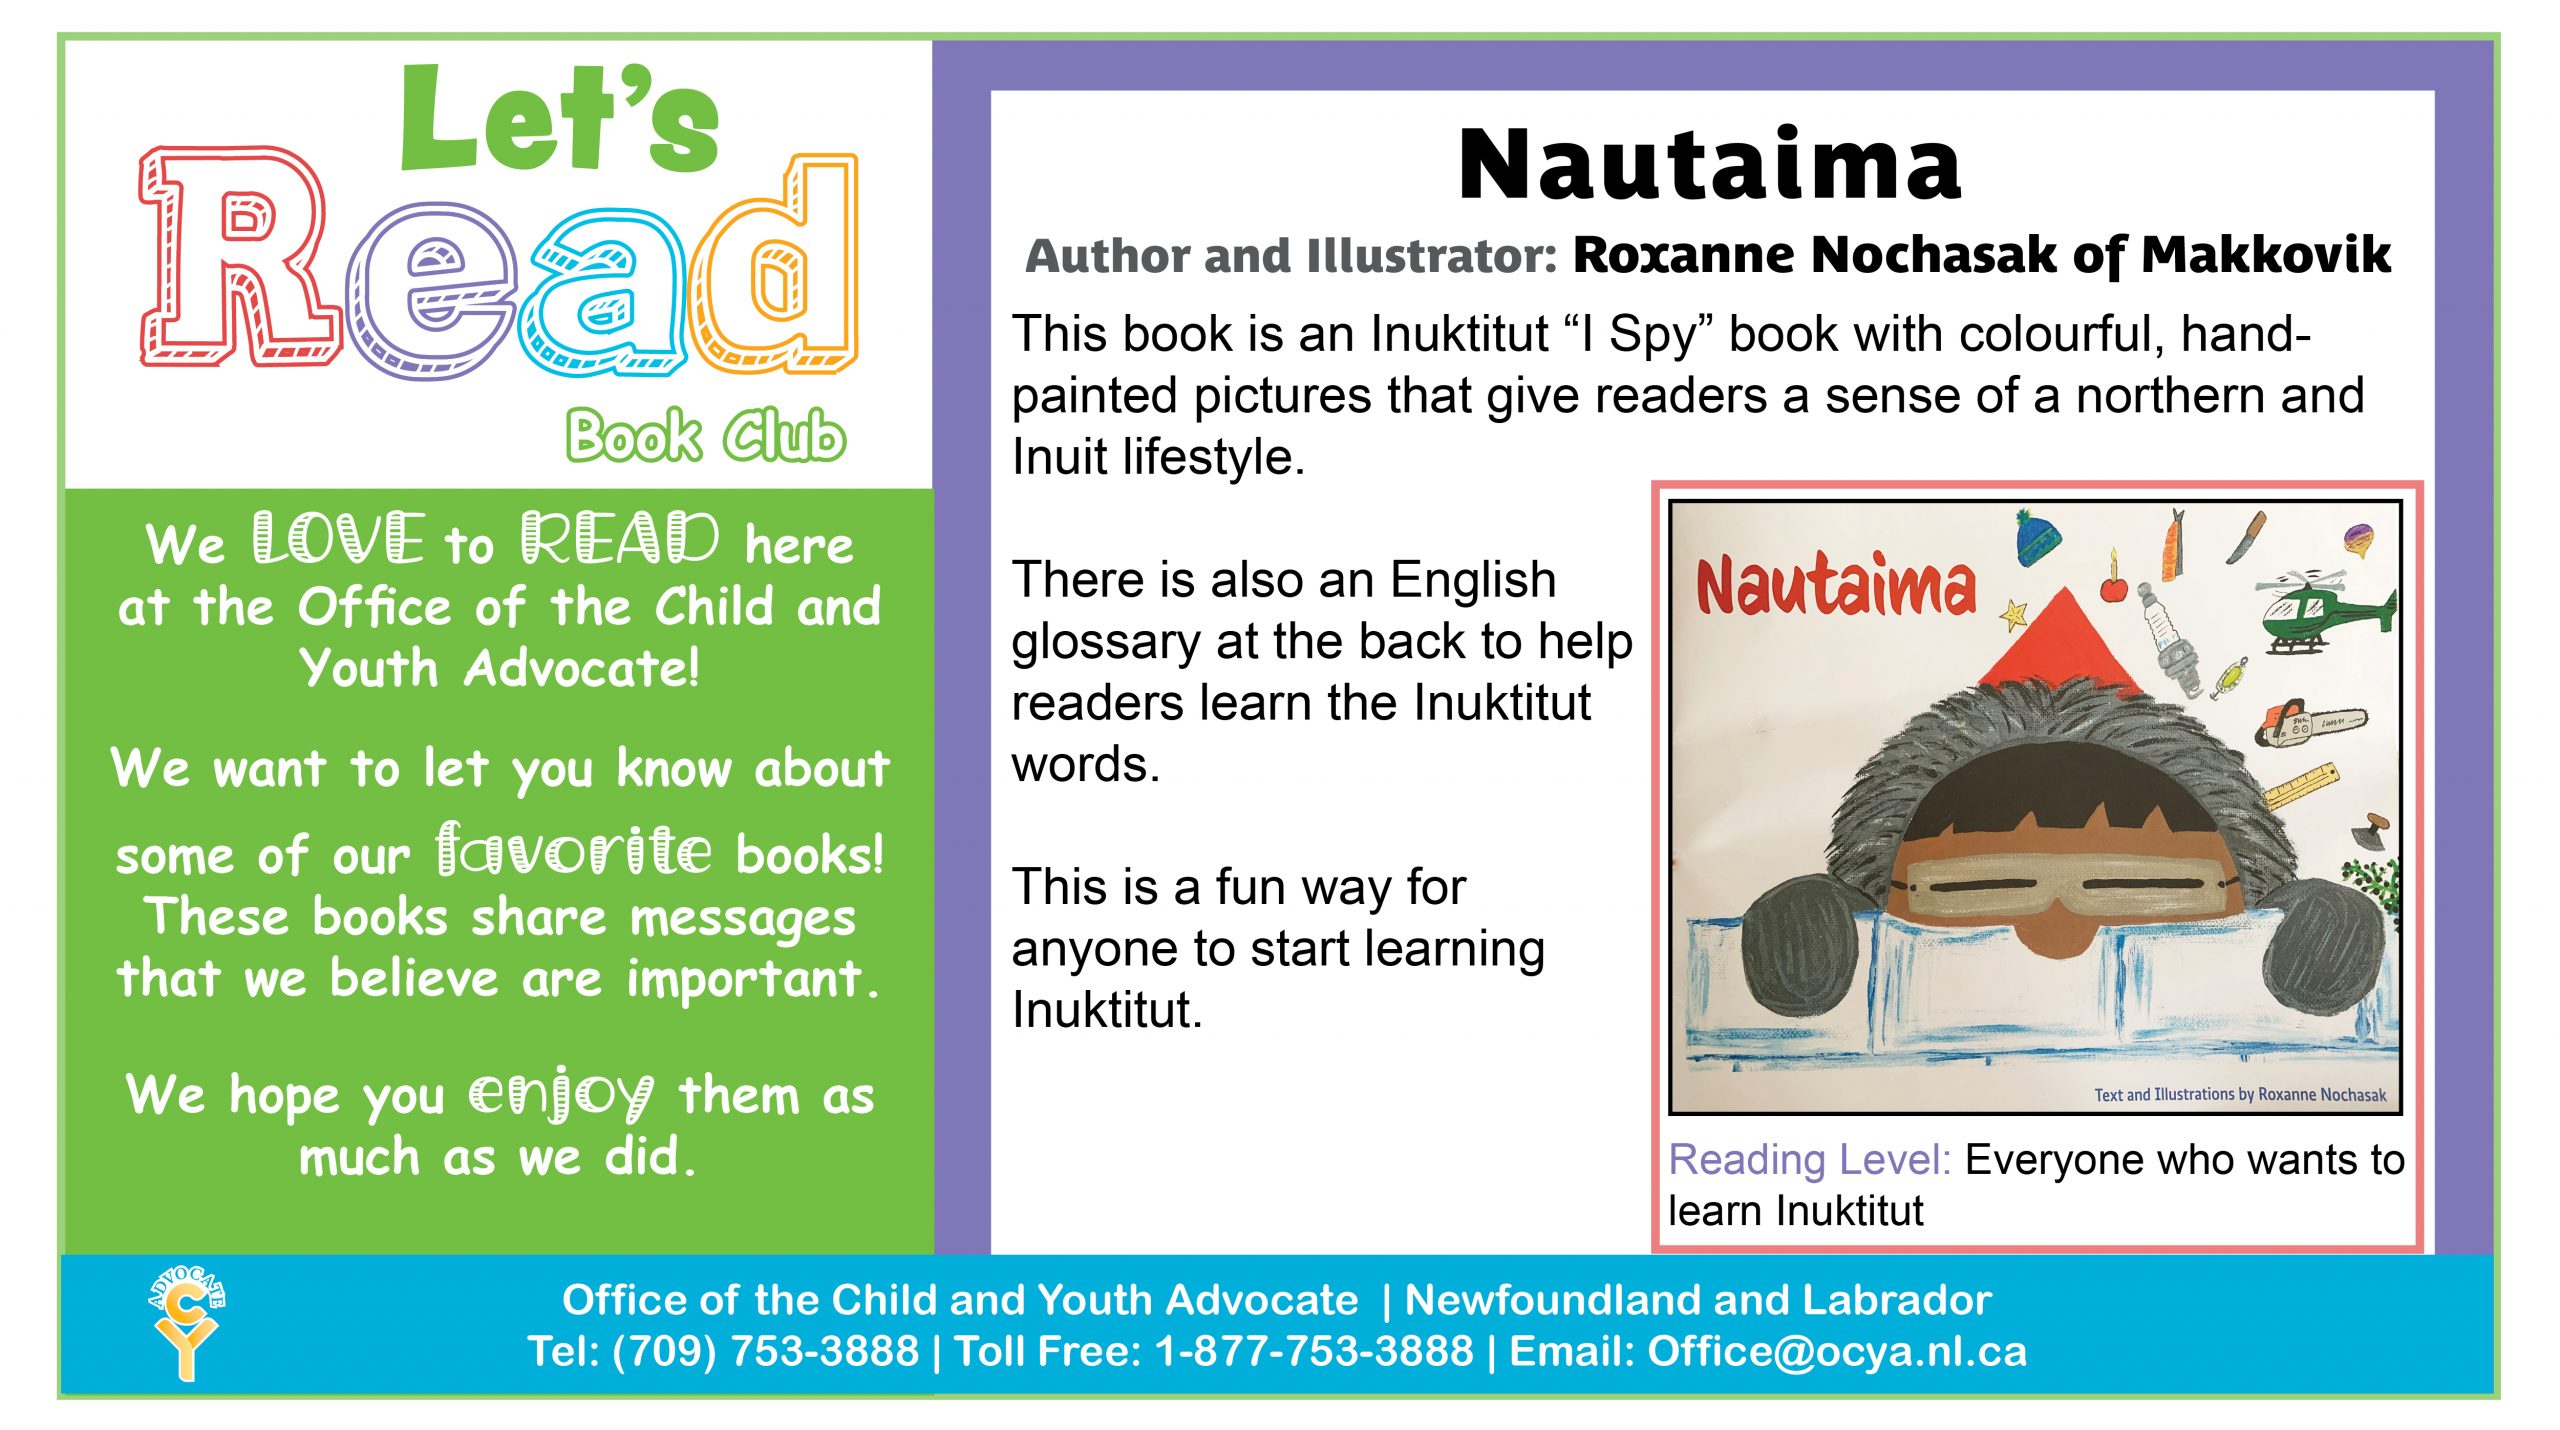 Nautaima, by Roxanne Nochasak of Makkovik. This book is an Inuktitut 